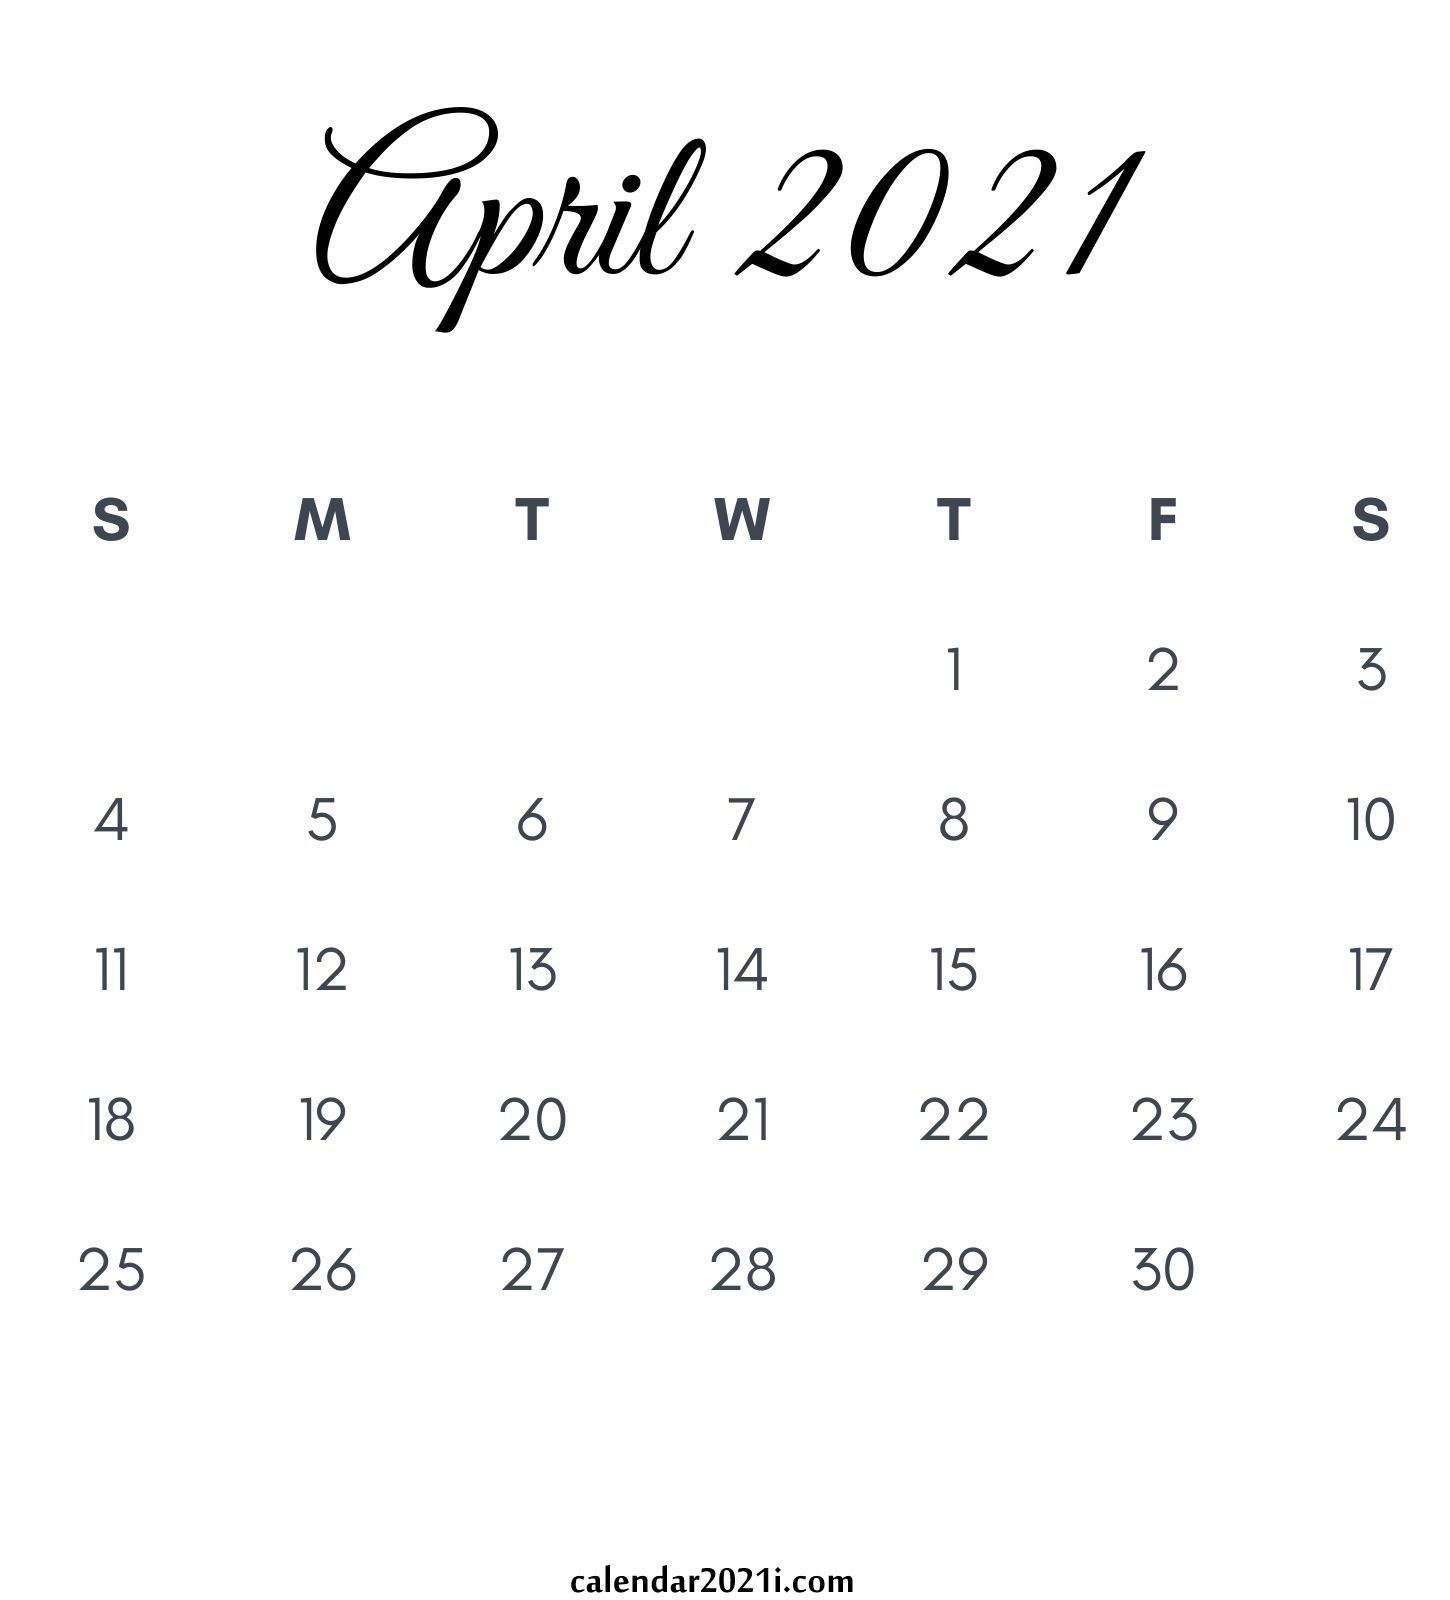 April 2021 Calendar: Printable, Floral, Holidays, Wallpaper, Design & More